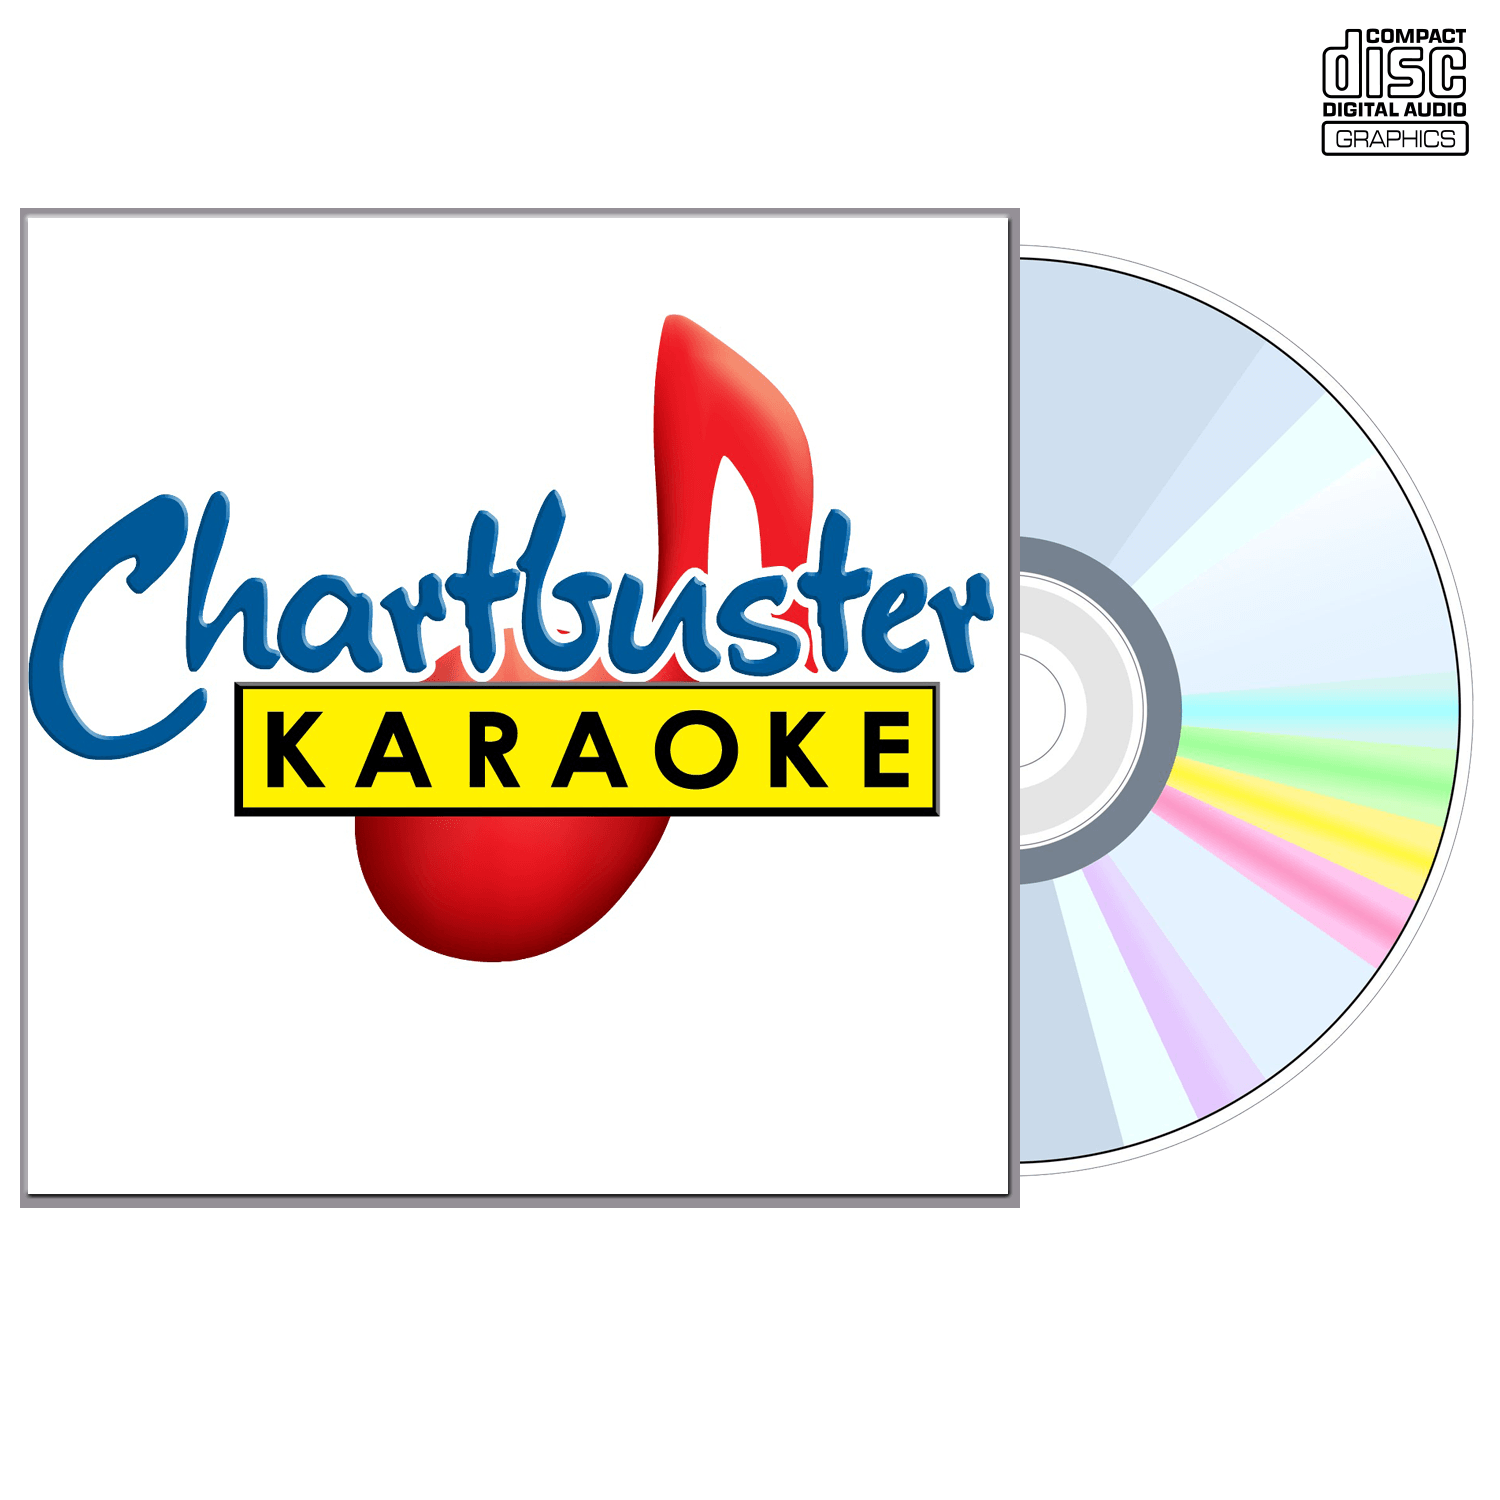 Miranda Lambert - CD+G - Chartbuster Karaoke - Karaoke Home Entertainment